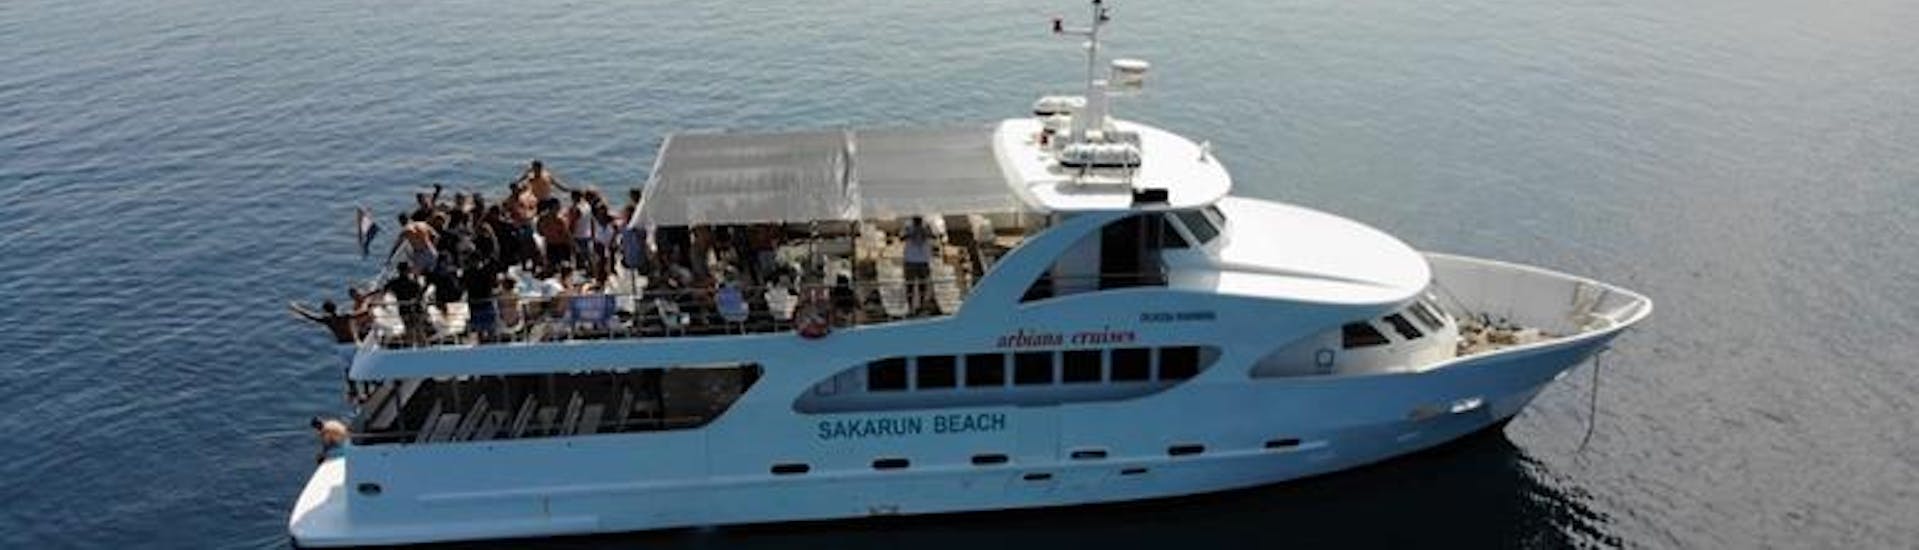 Paseo en barco de Zadar a Beach Sakarun con baño en el mar & avistamiento de fauna.